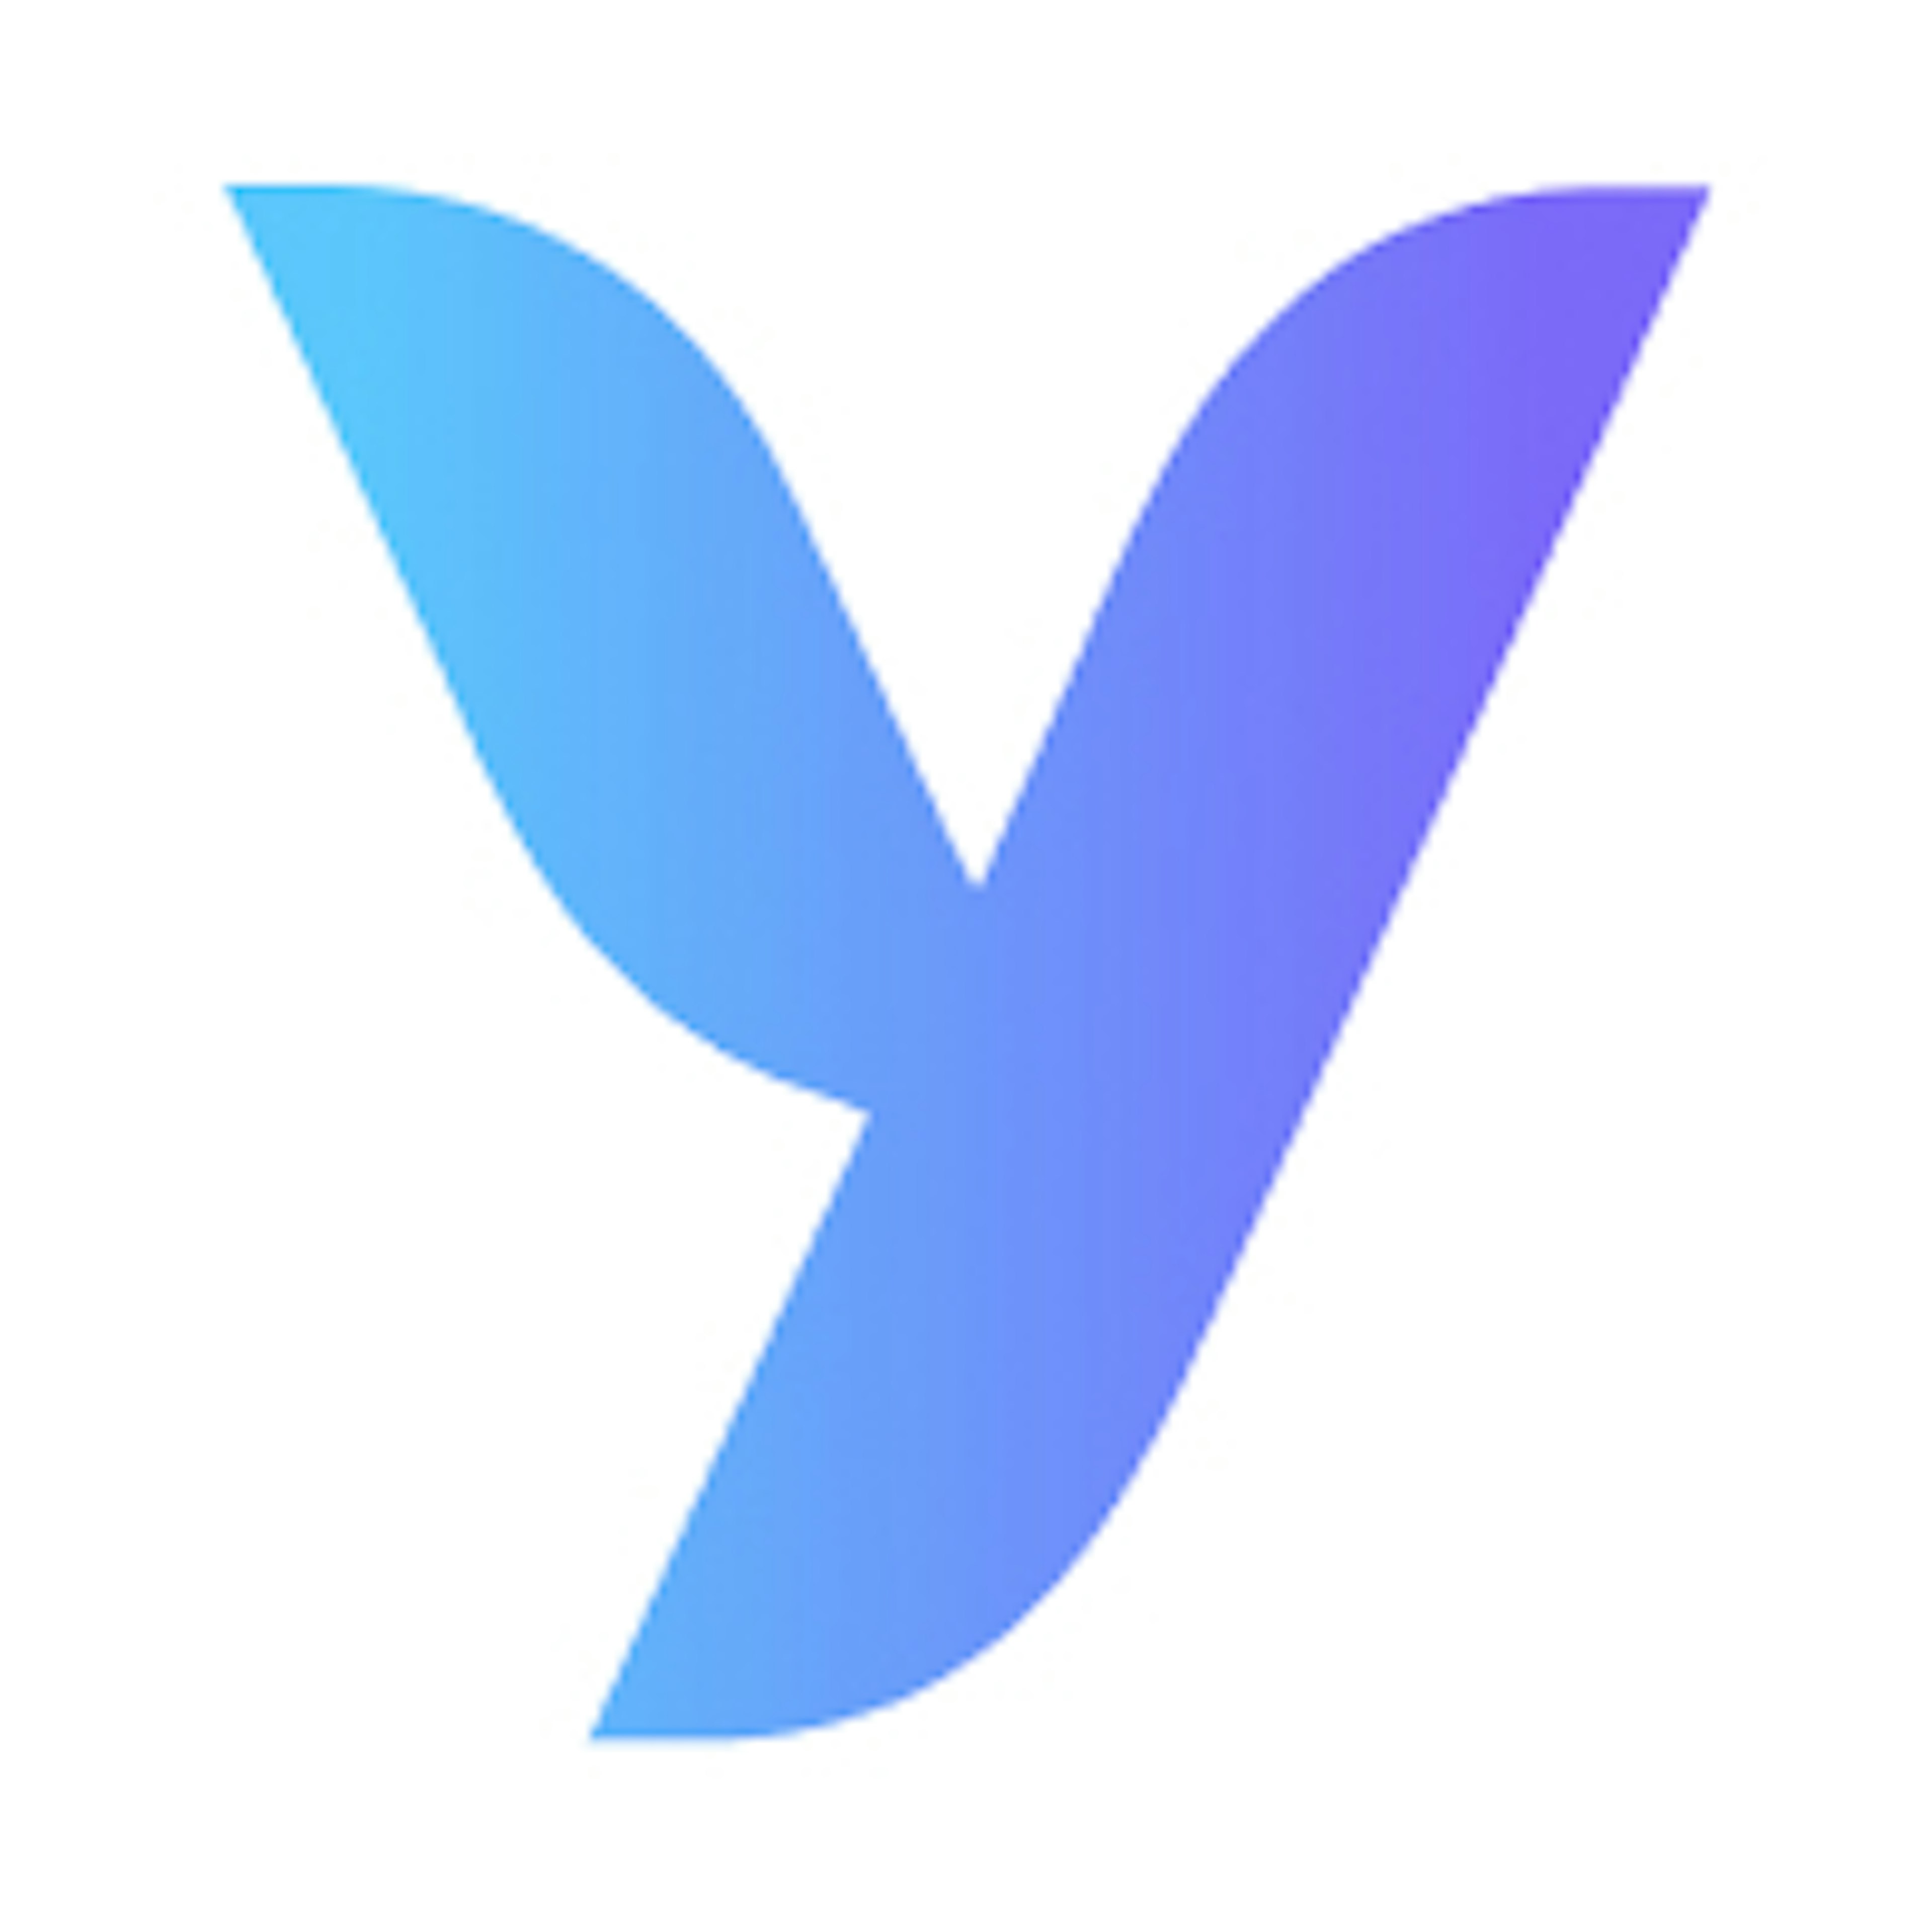 YOOBIC Logo